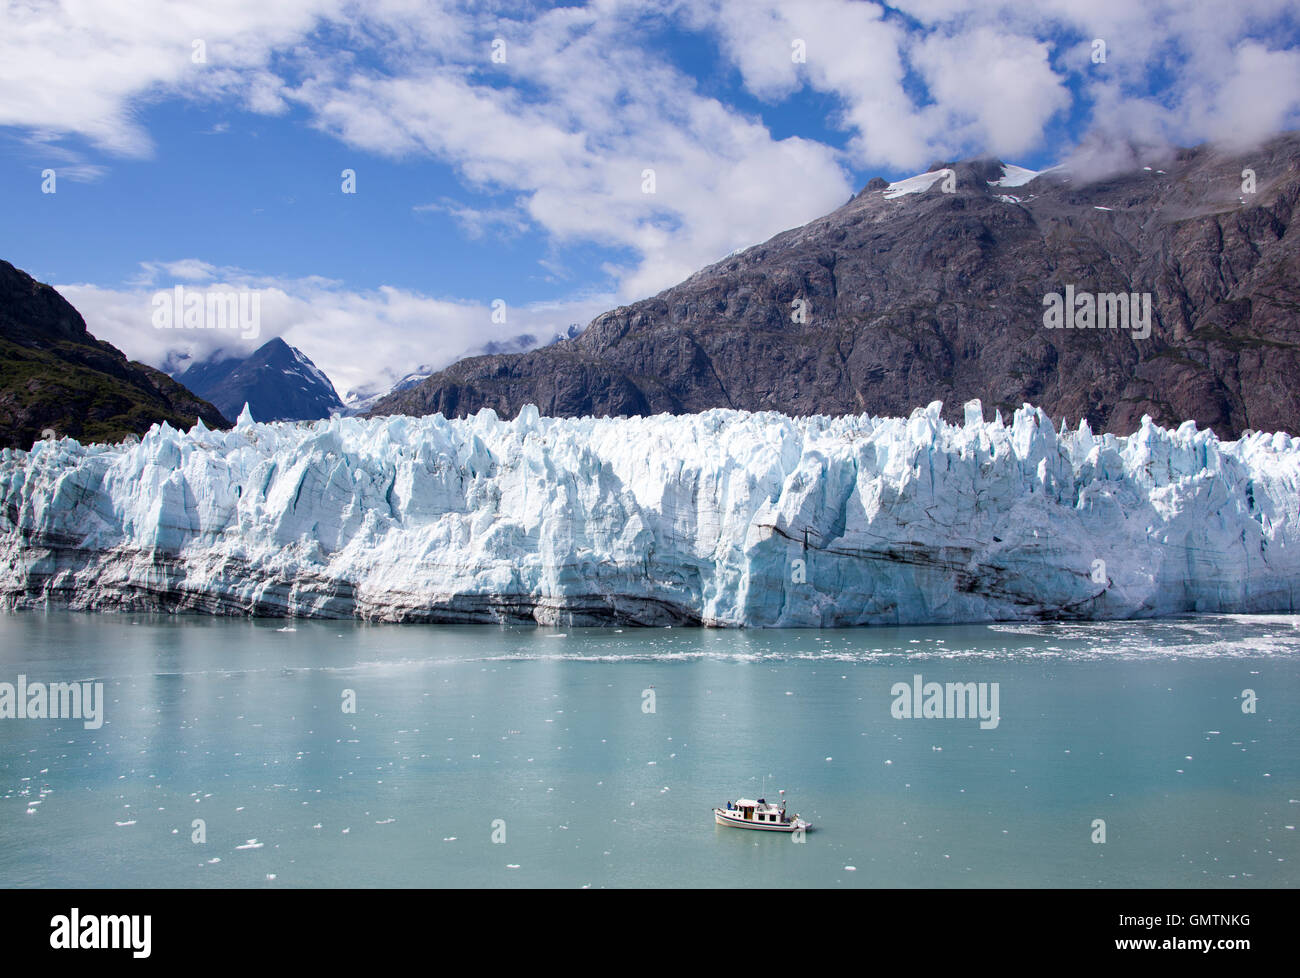 The little tourist boat getting closer to the glacier in Glacier Bay national park (Alaska). Stock Photo